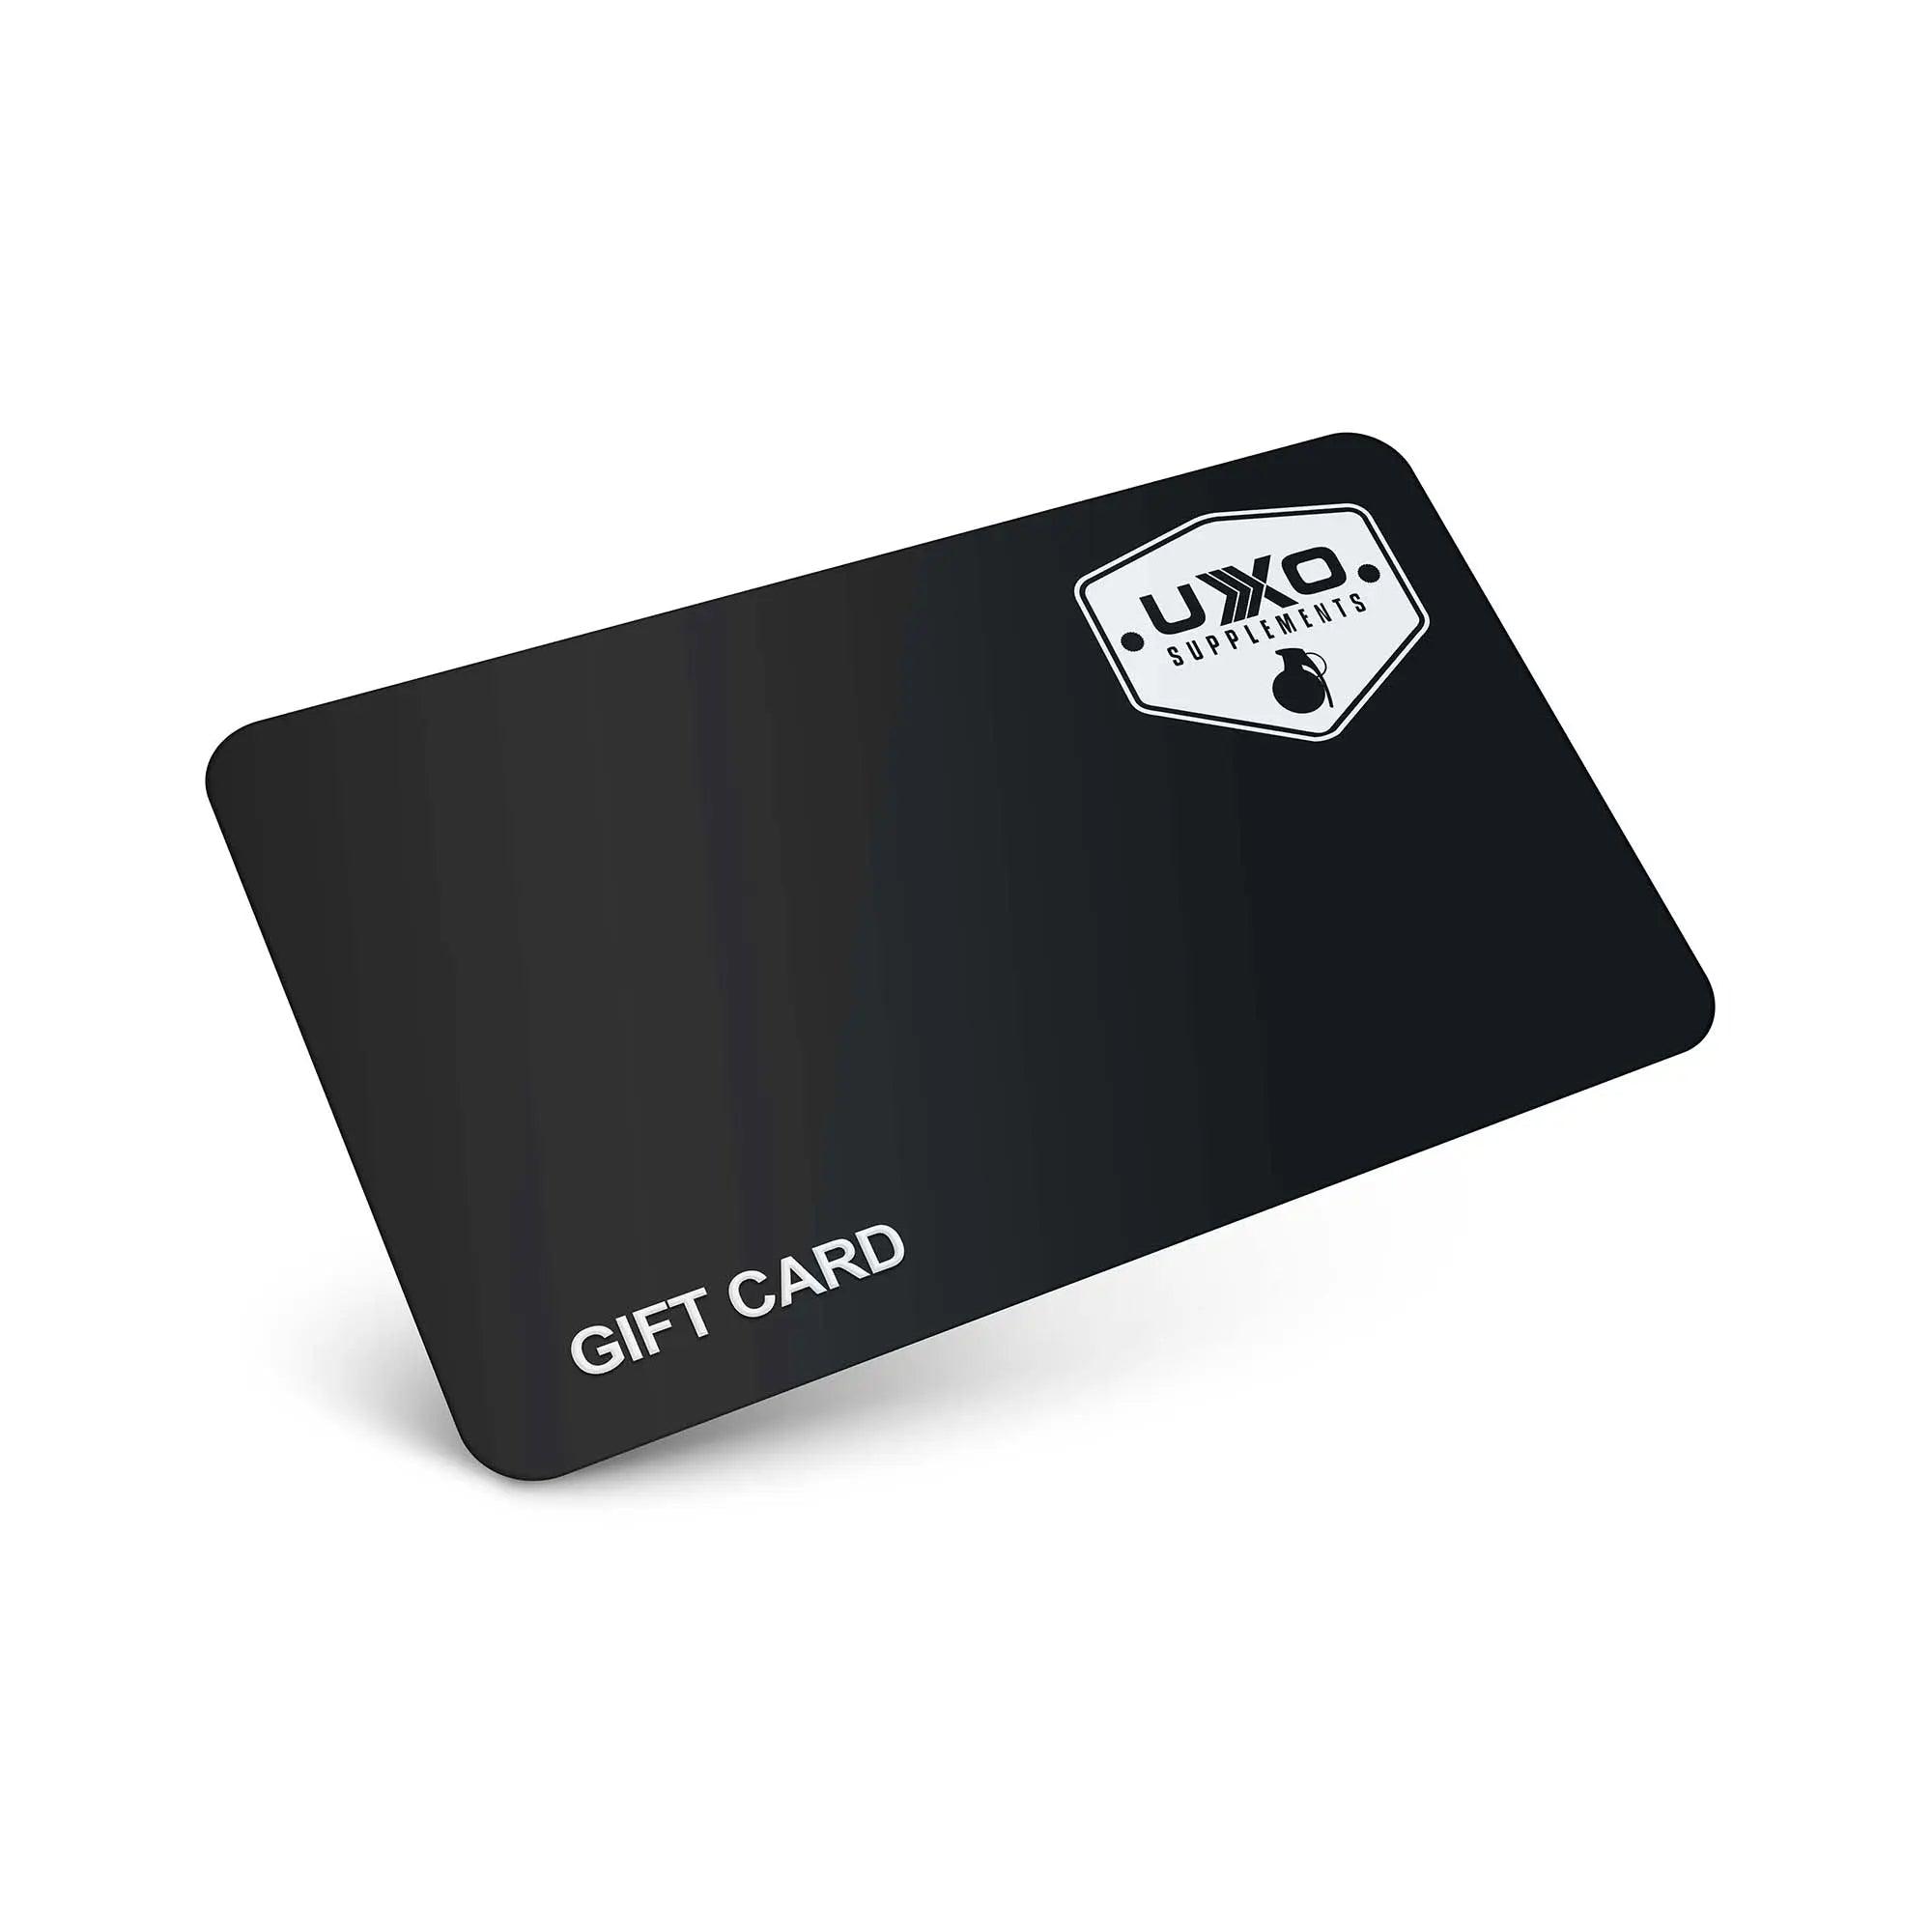 Gift Cards - UXO Supplements